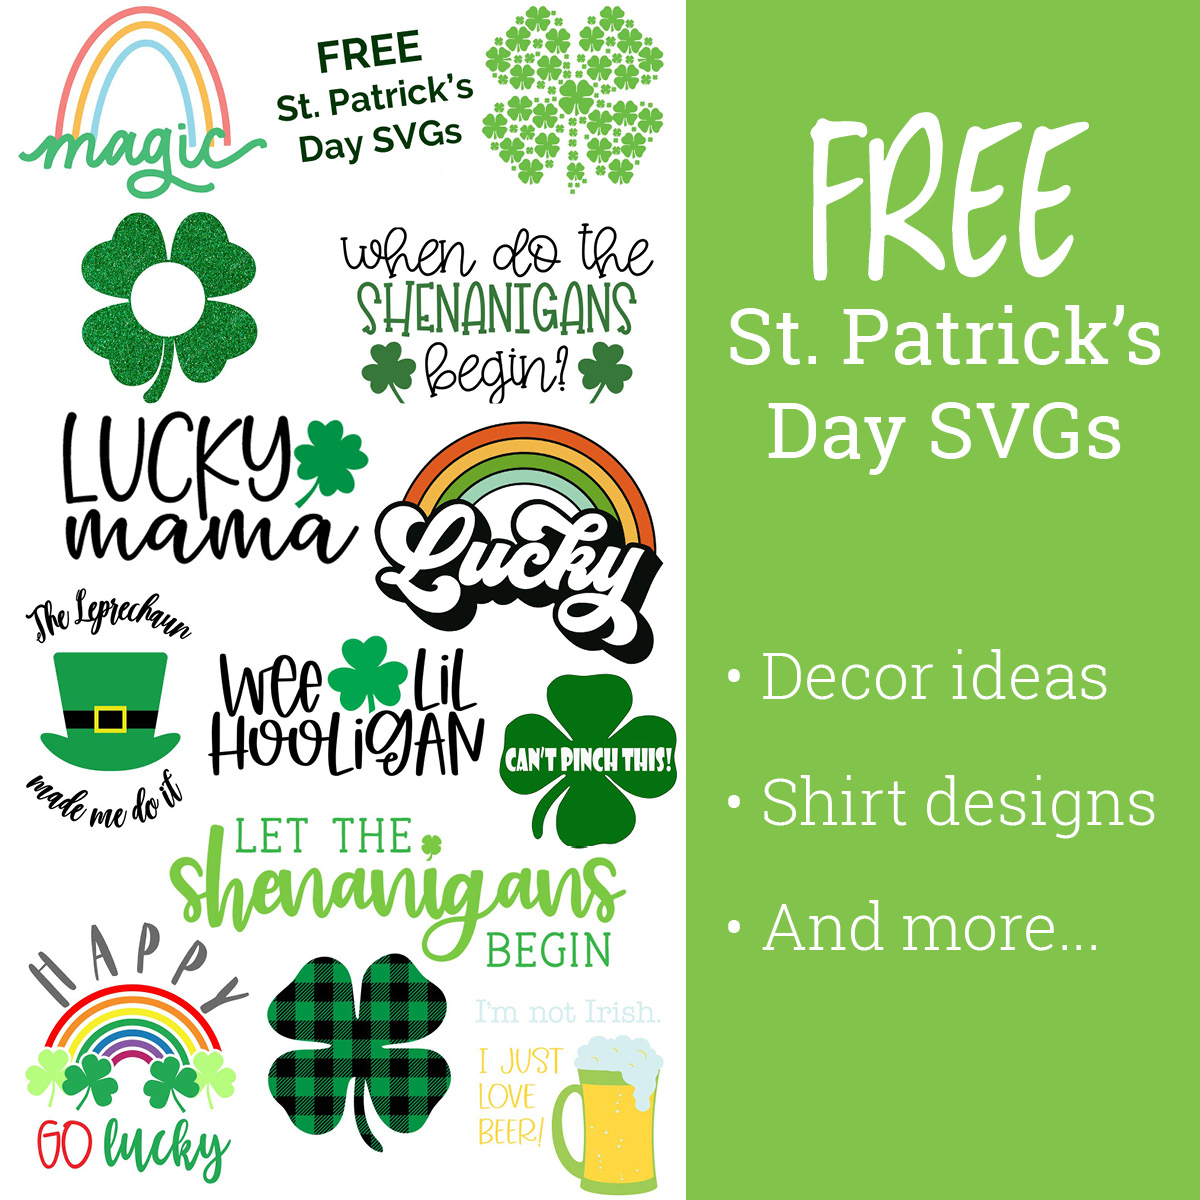 13 FREE St. Patrick’s Day SVG Files